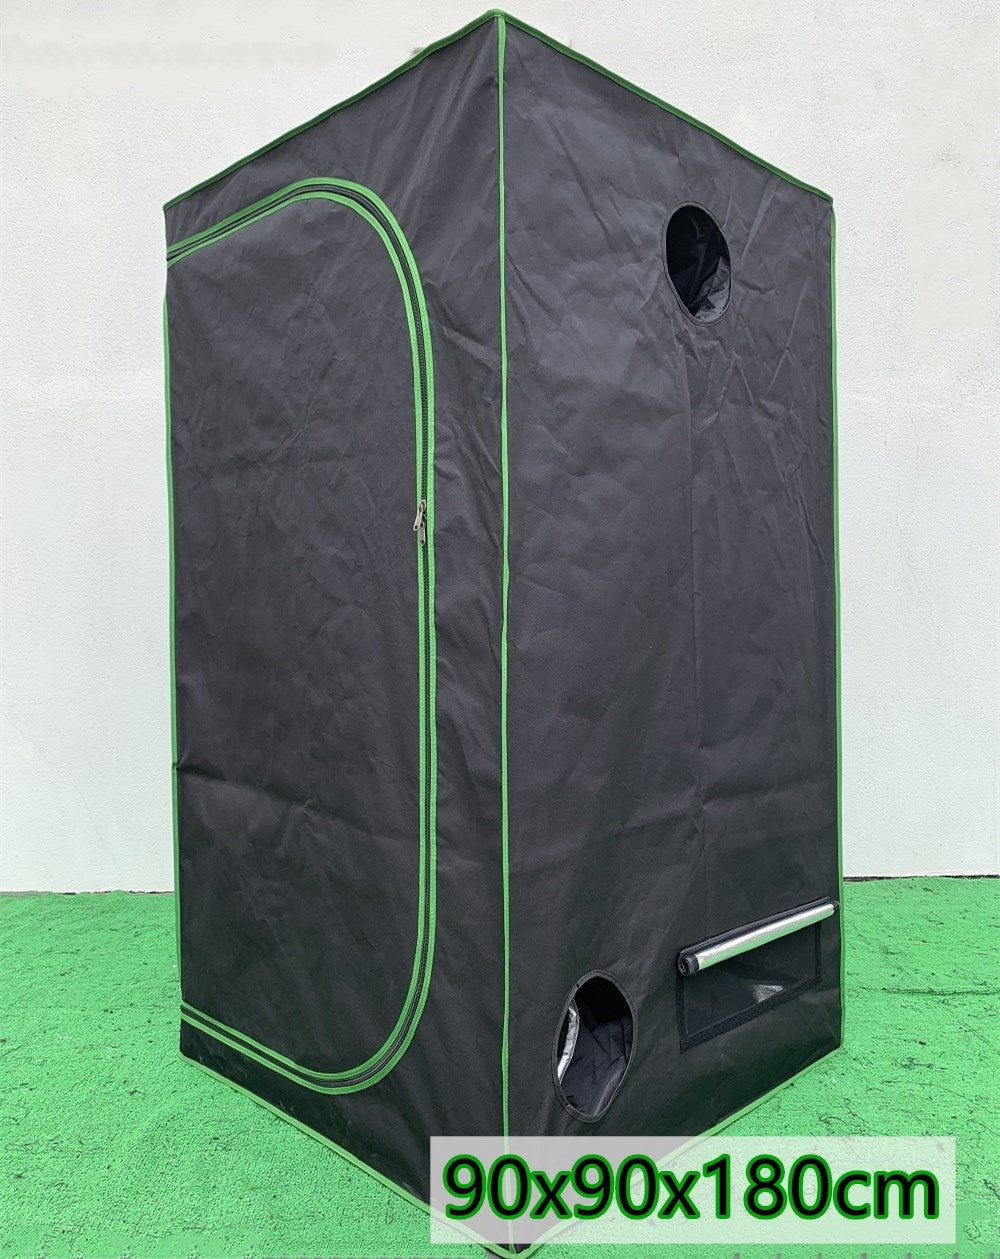 Hydroponic Indoor Reflective Grow Tent Room Plant  - 90x90x180cm